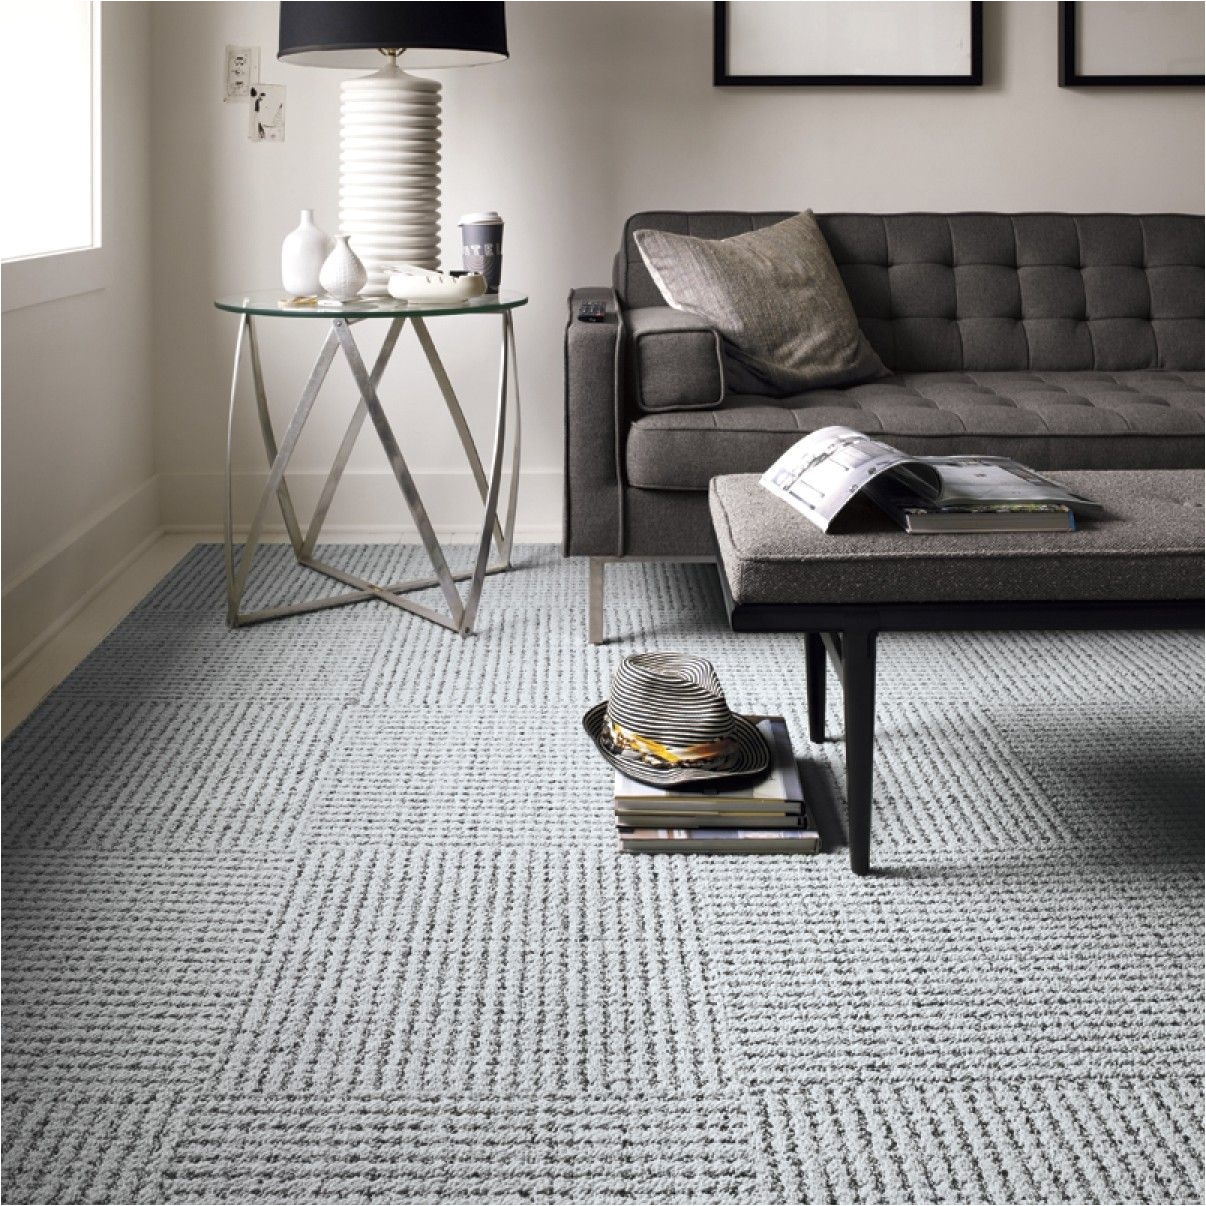 flor carpet tiles love this chunky gray pattern for boys room